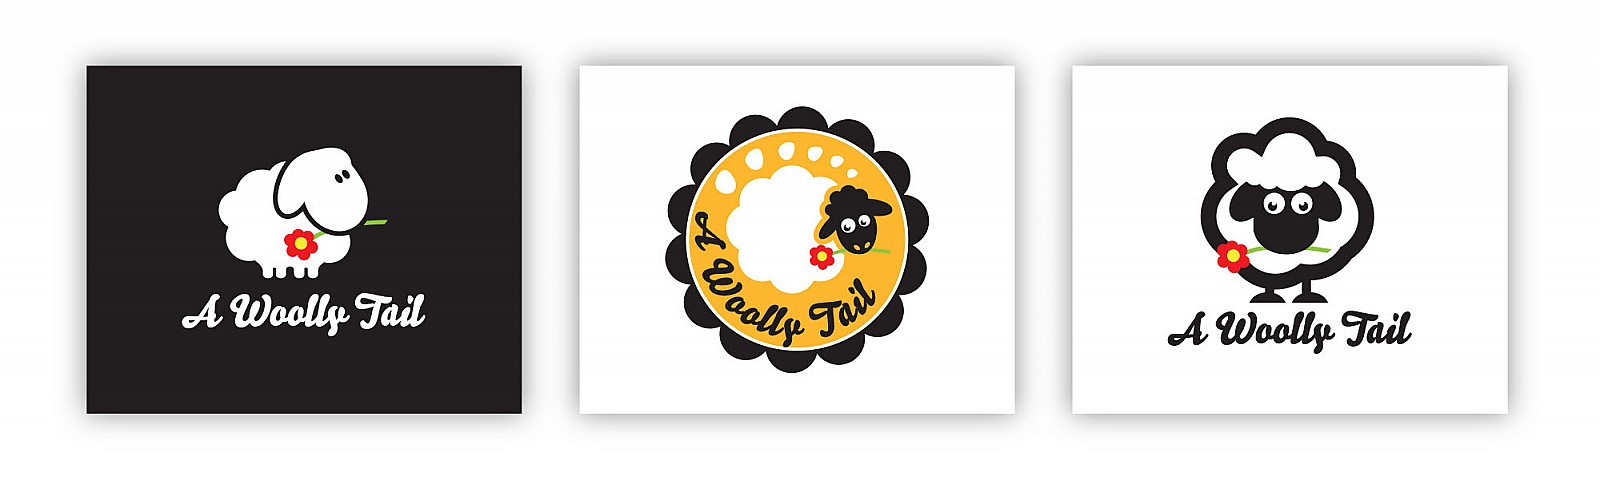 A Woolly Tail Logo - Logo Design